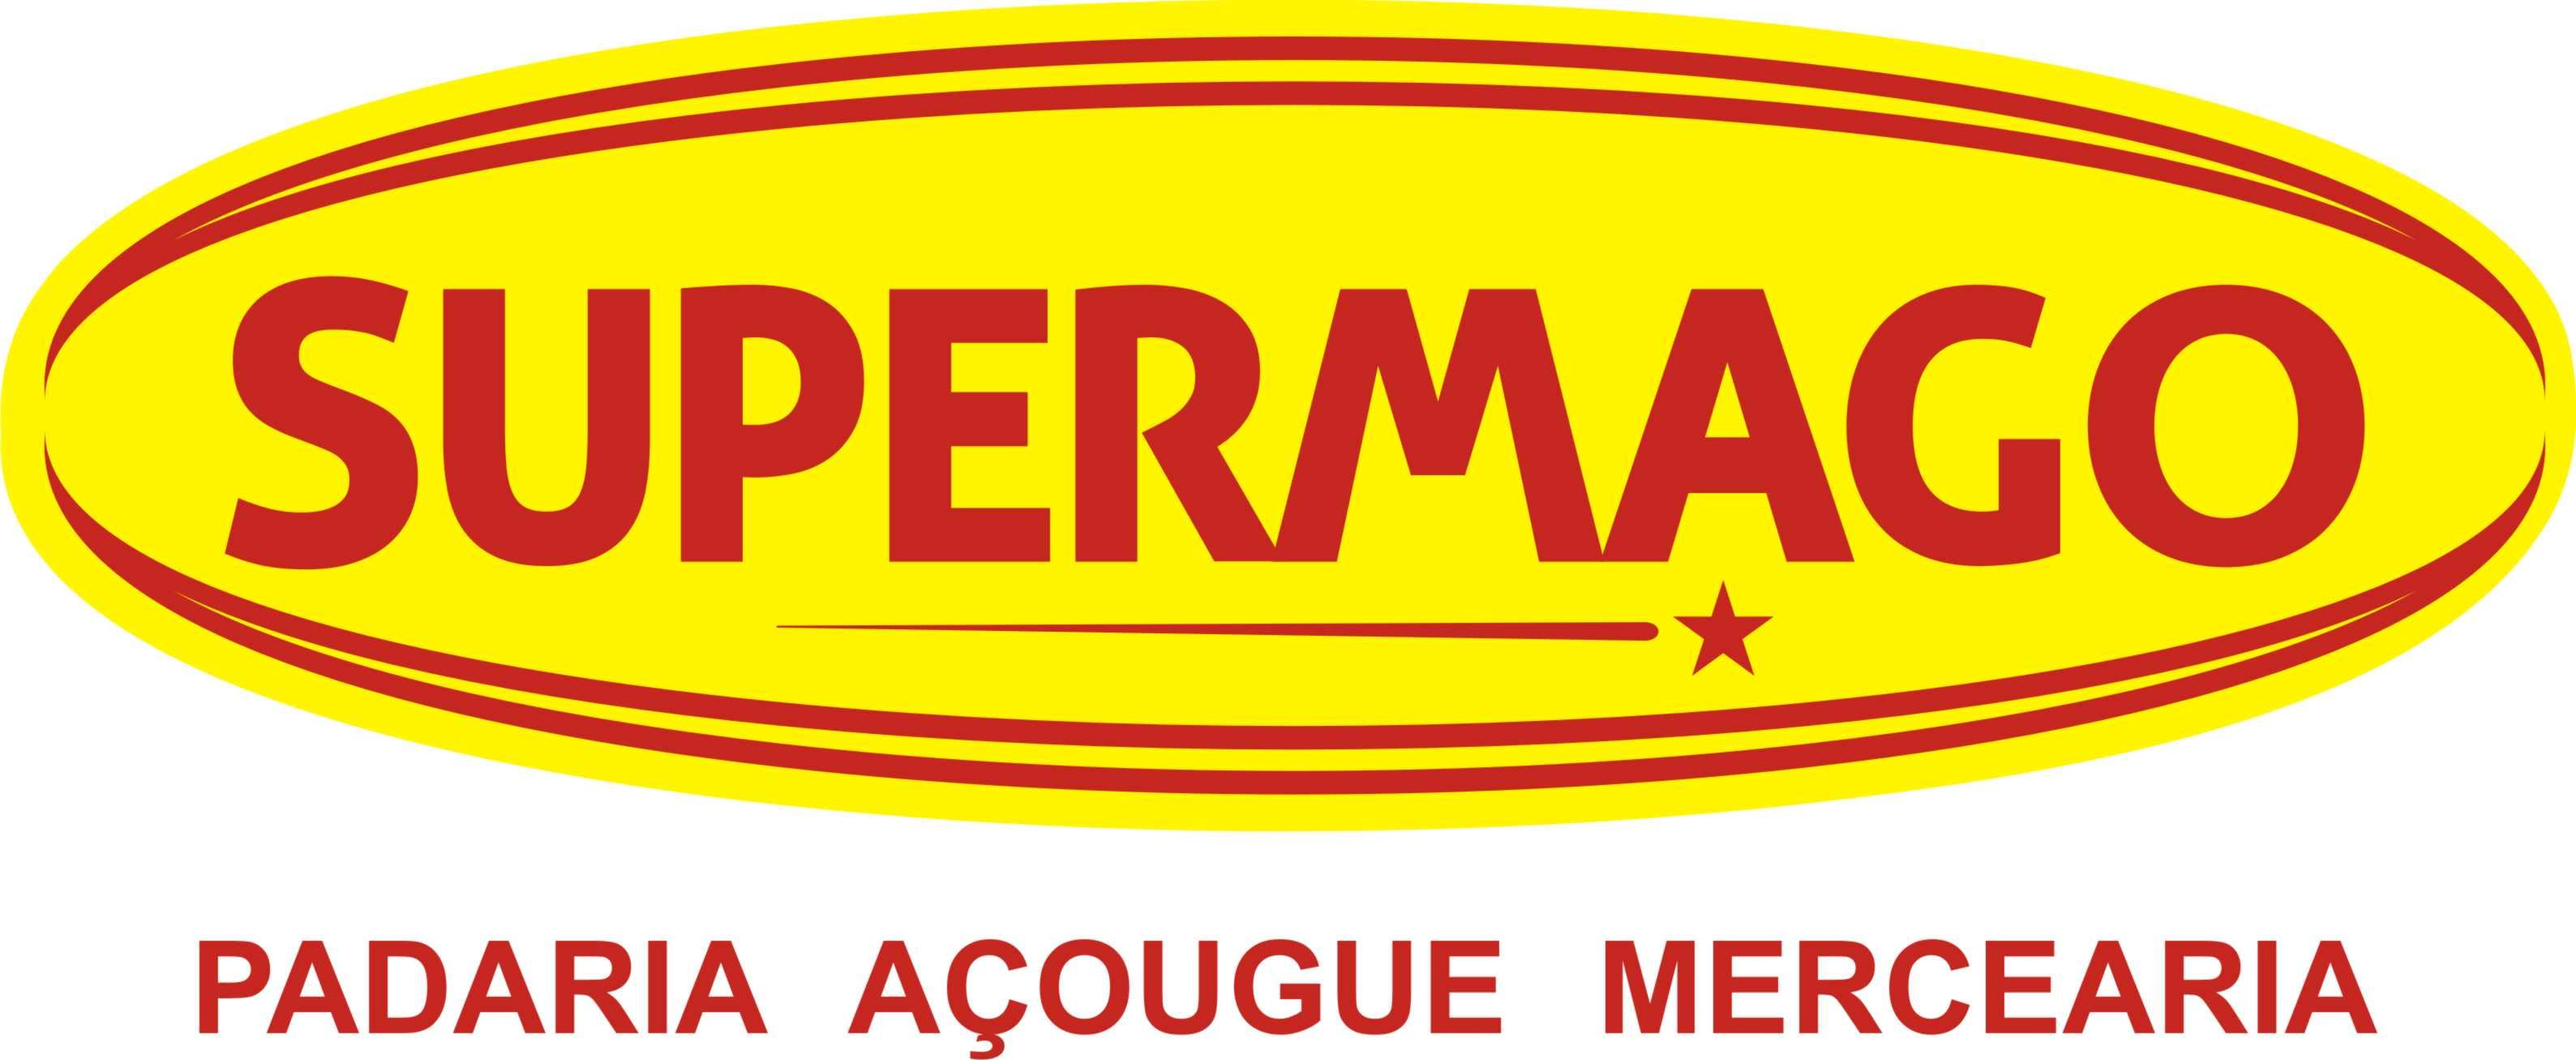 Supermago - Padaria, Açougue e Mercearia logo